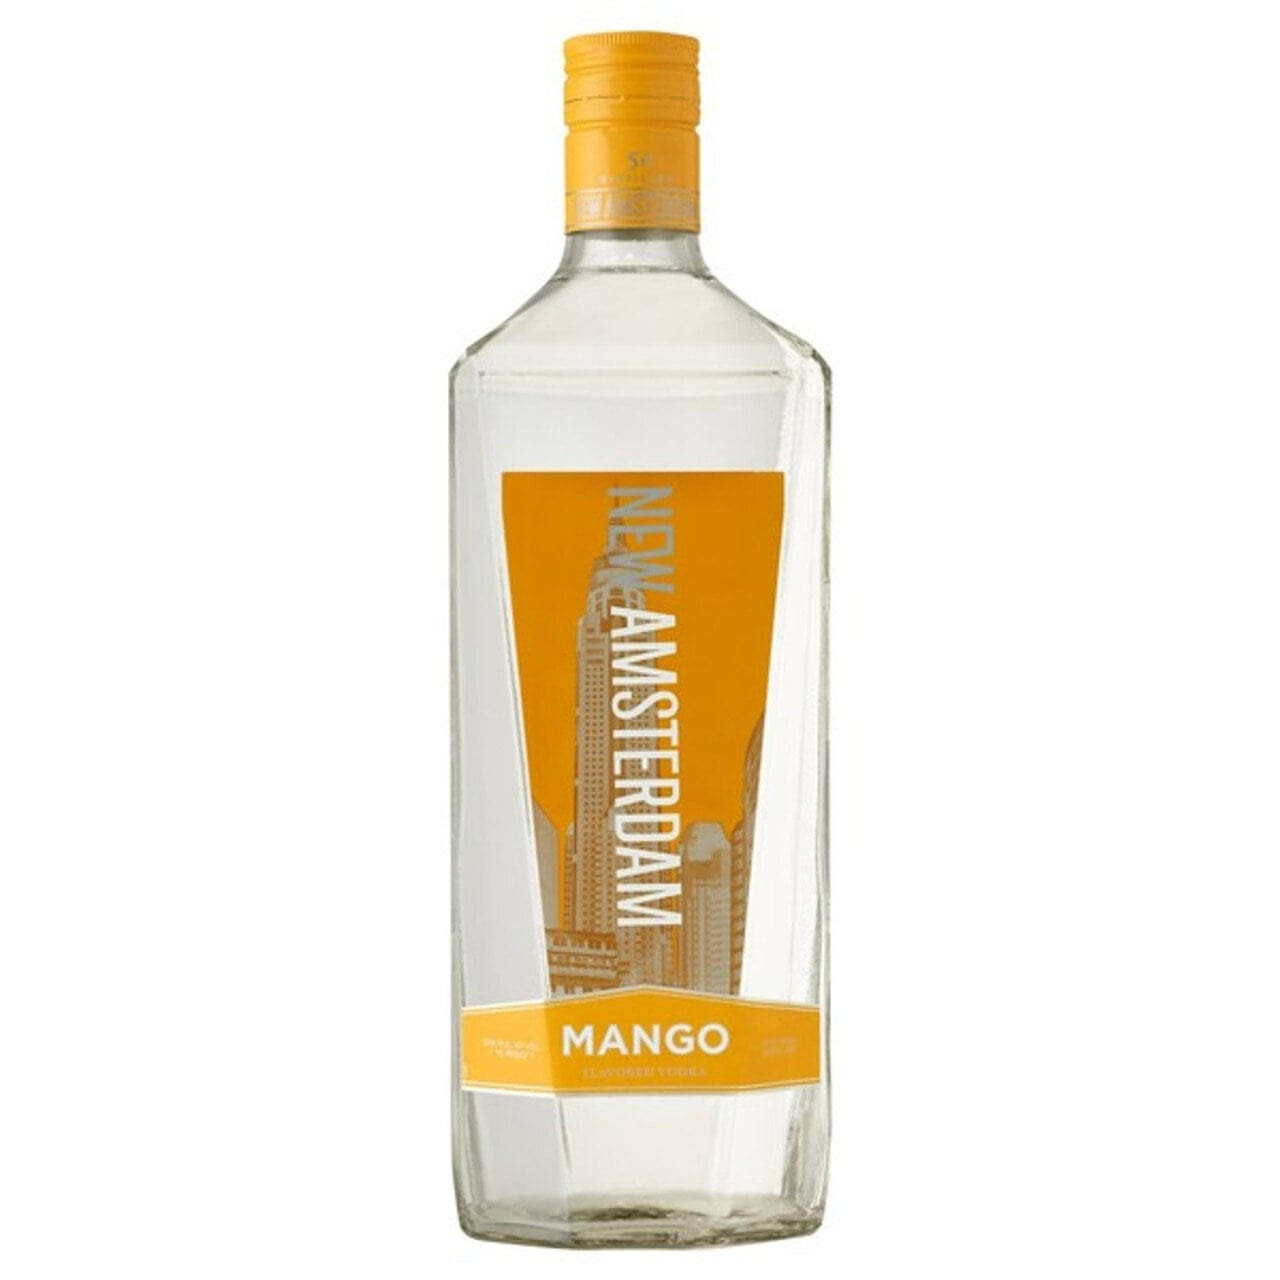 New Amsterdam Mango Vodka - 1.75 L bottle